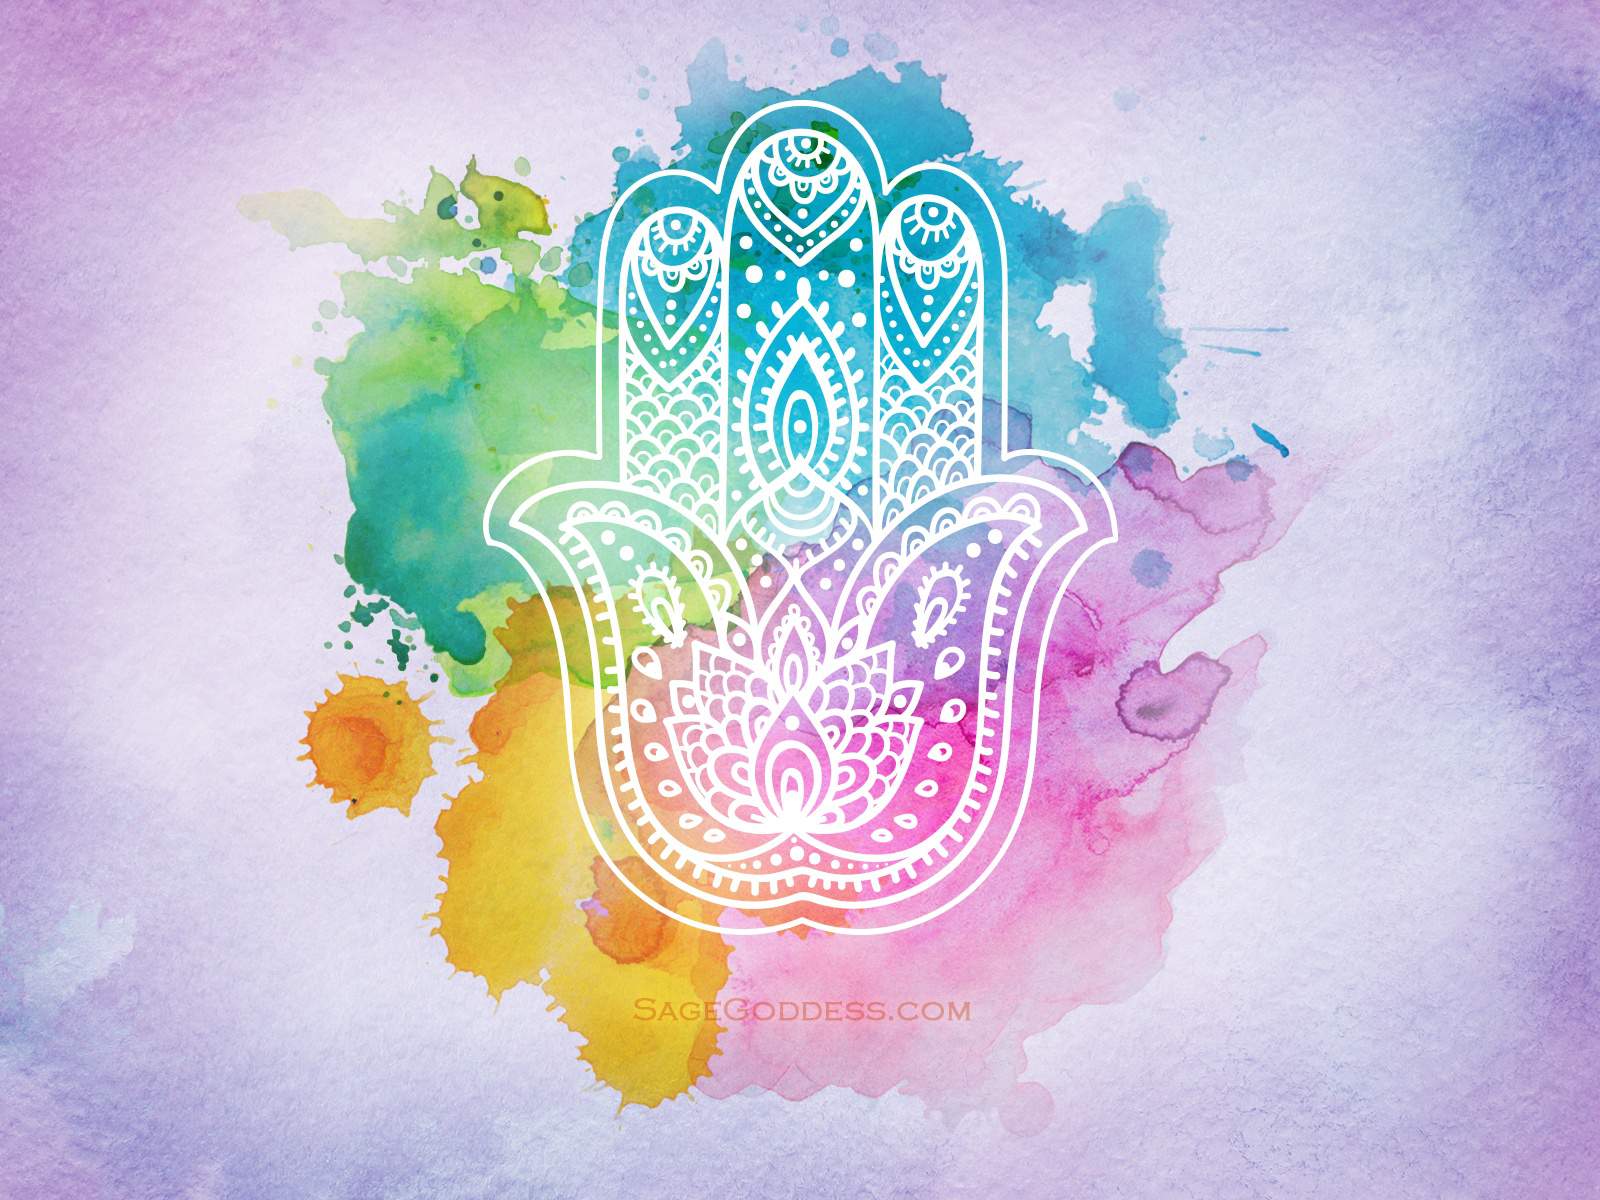 Free Custom Sage Goddess Downloadable Hamsa Hand Wallpaper